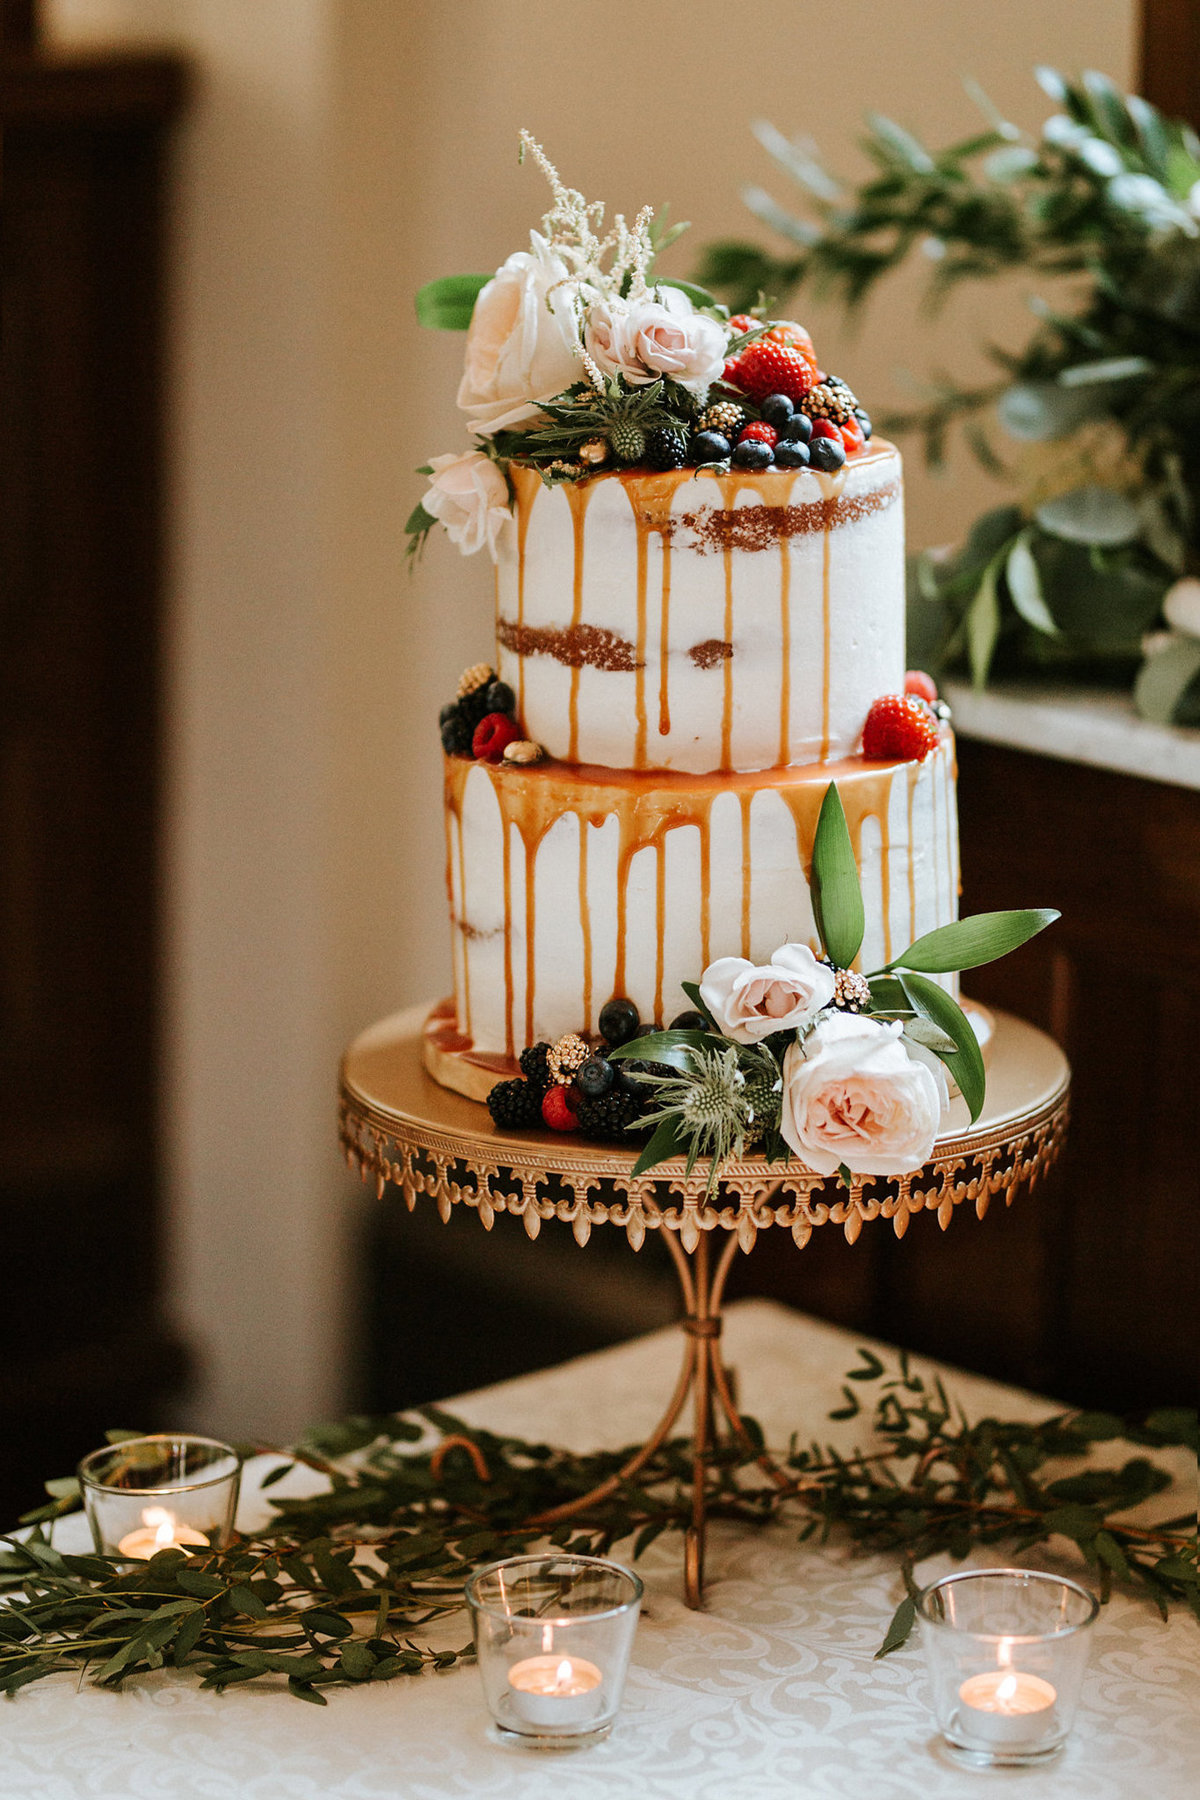 Whippt Wedding Cake - Semi-Naked design with drip